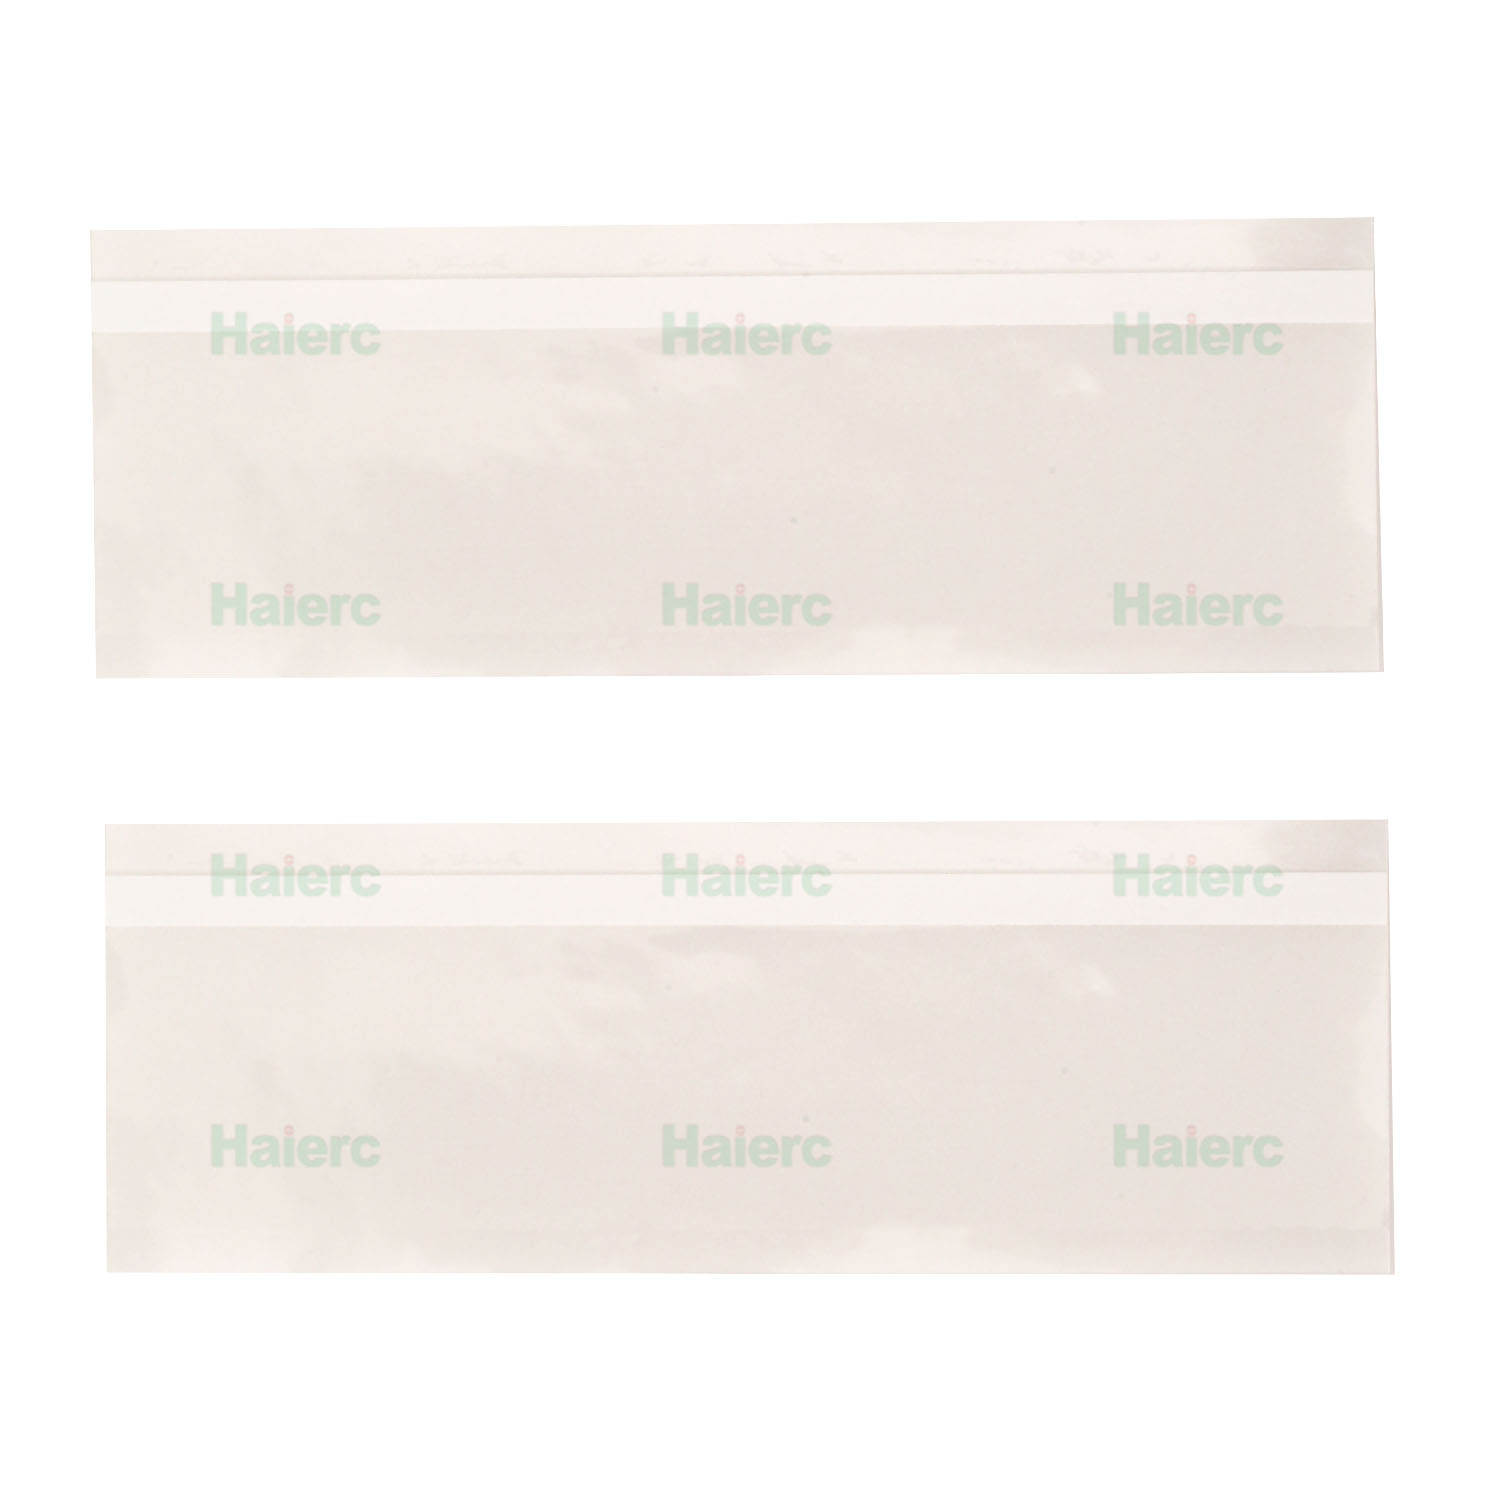 >Haierc Window Sticker Fruit Fly Glue Traps for Pest Control